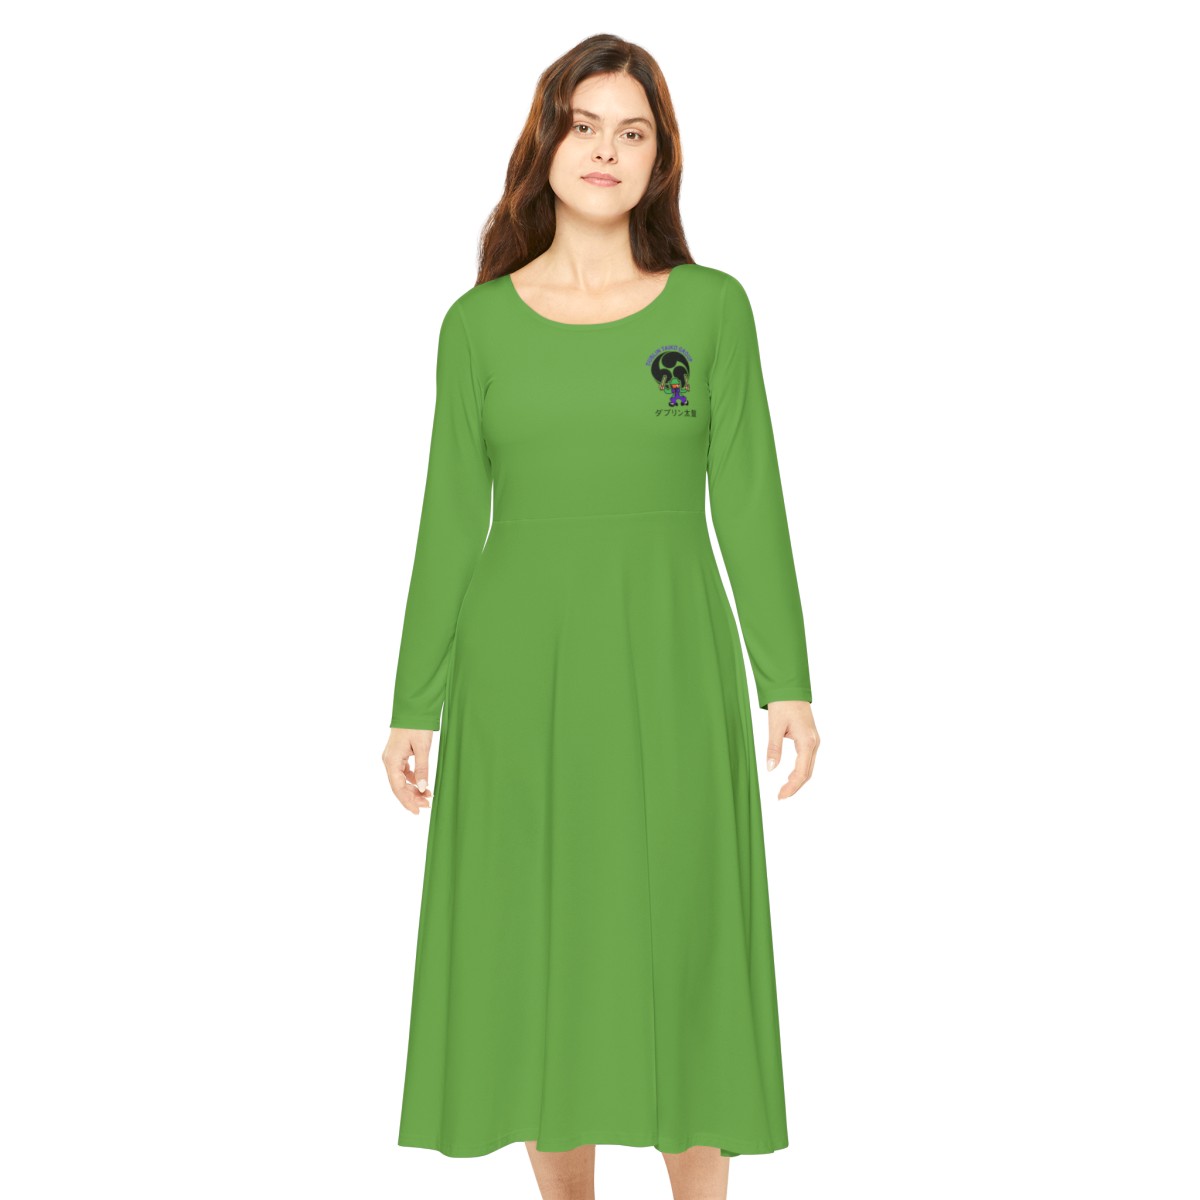 Women's Long Sleeve Dress product main image